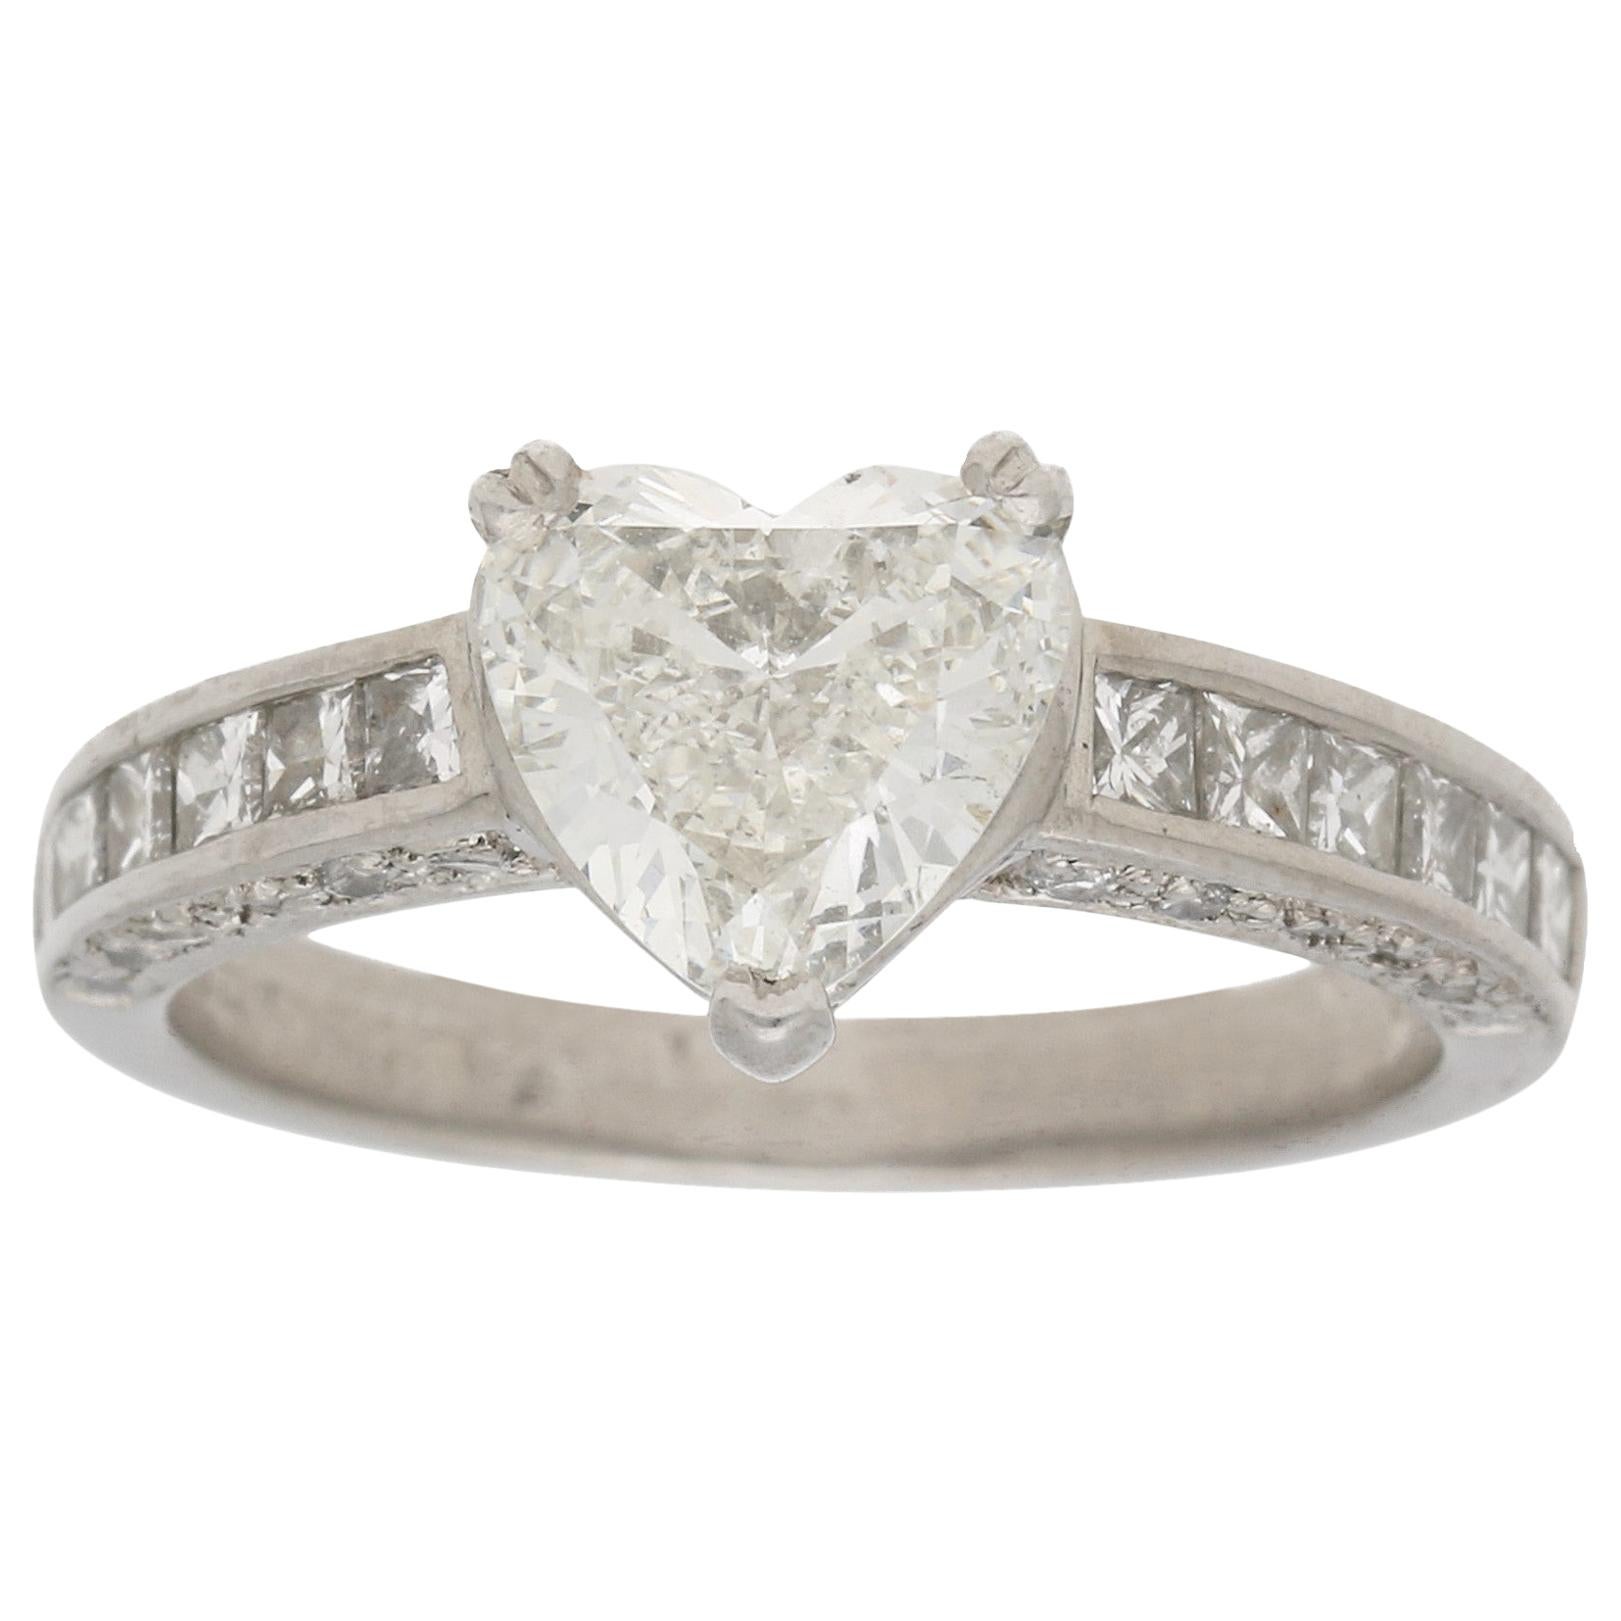 Heart and Princess Cut Diamond Engagement Ring Set in Platinum